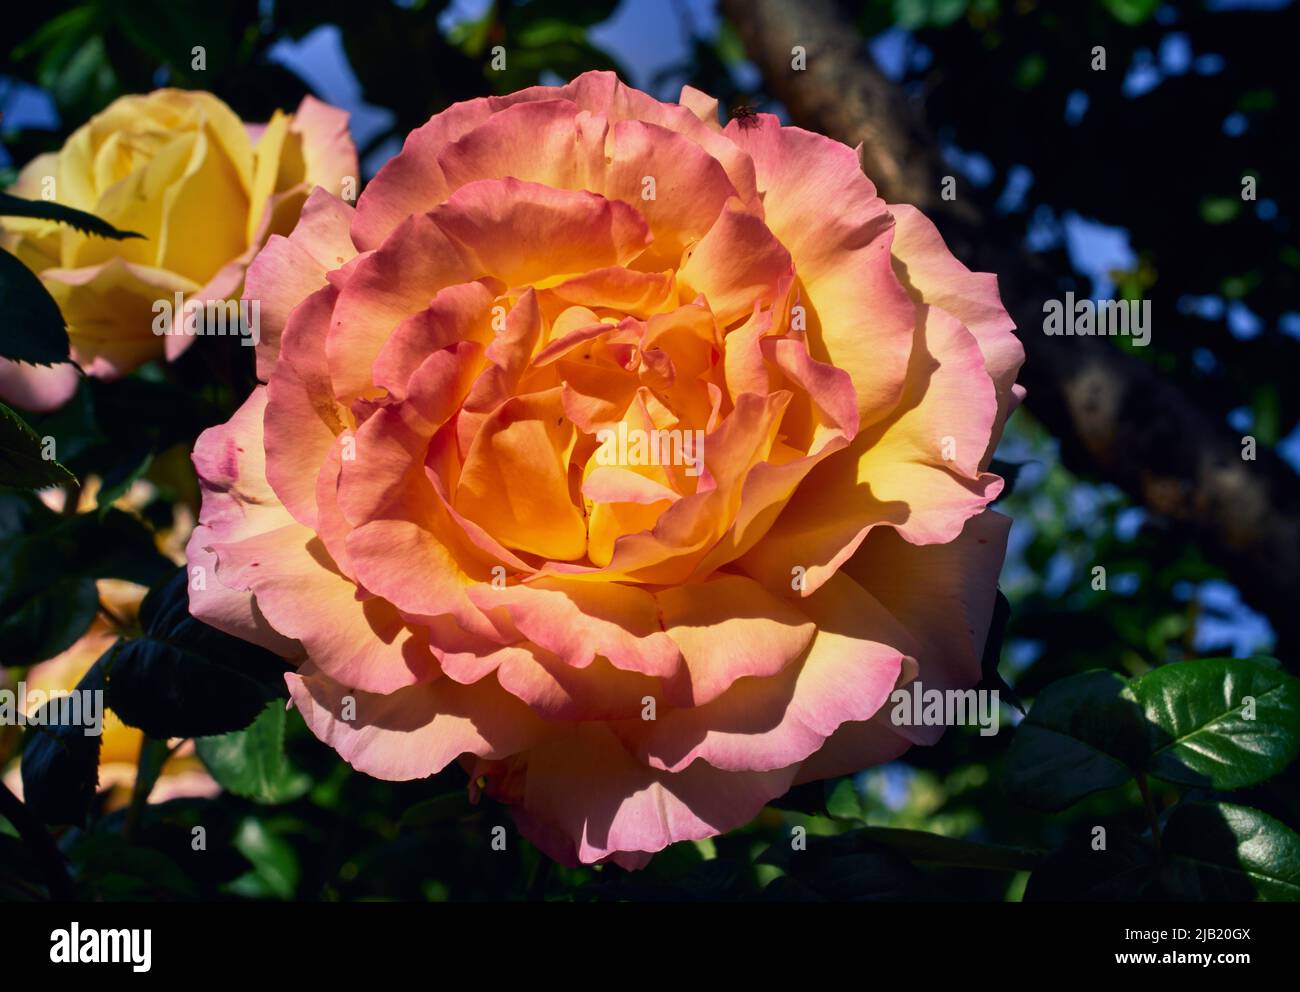 Close-up photo of a beautiful Hybrid Tea rose in sunlight Stock Photo